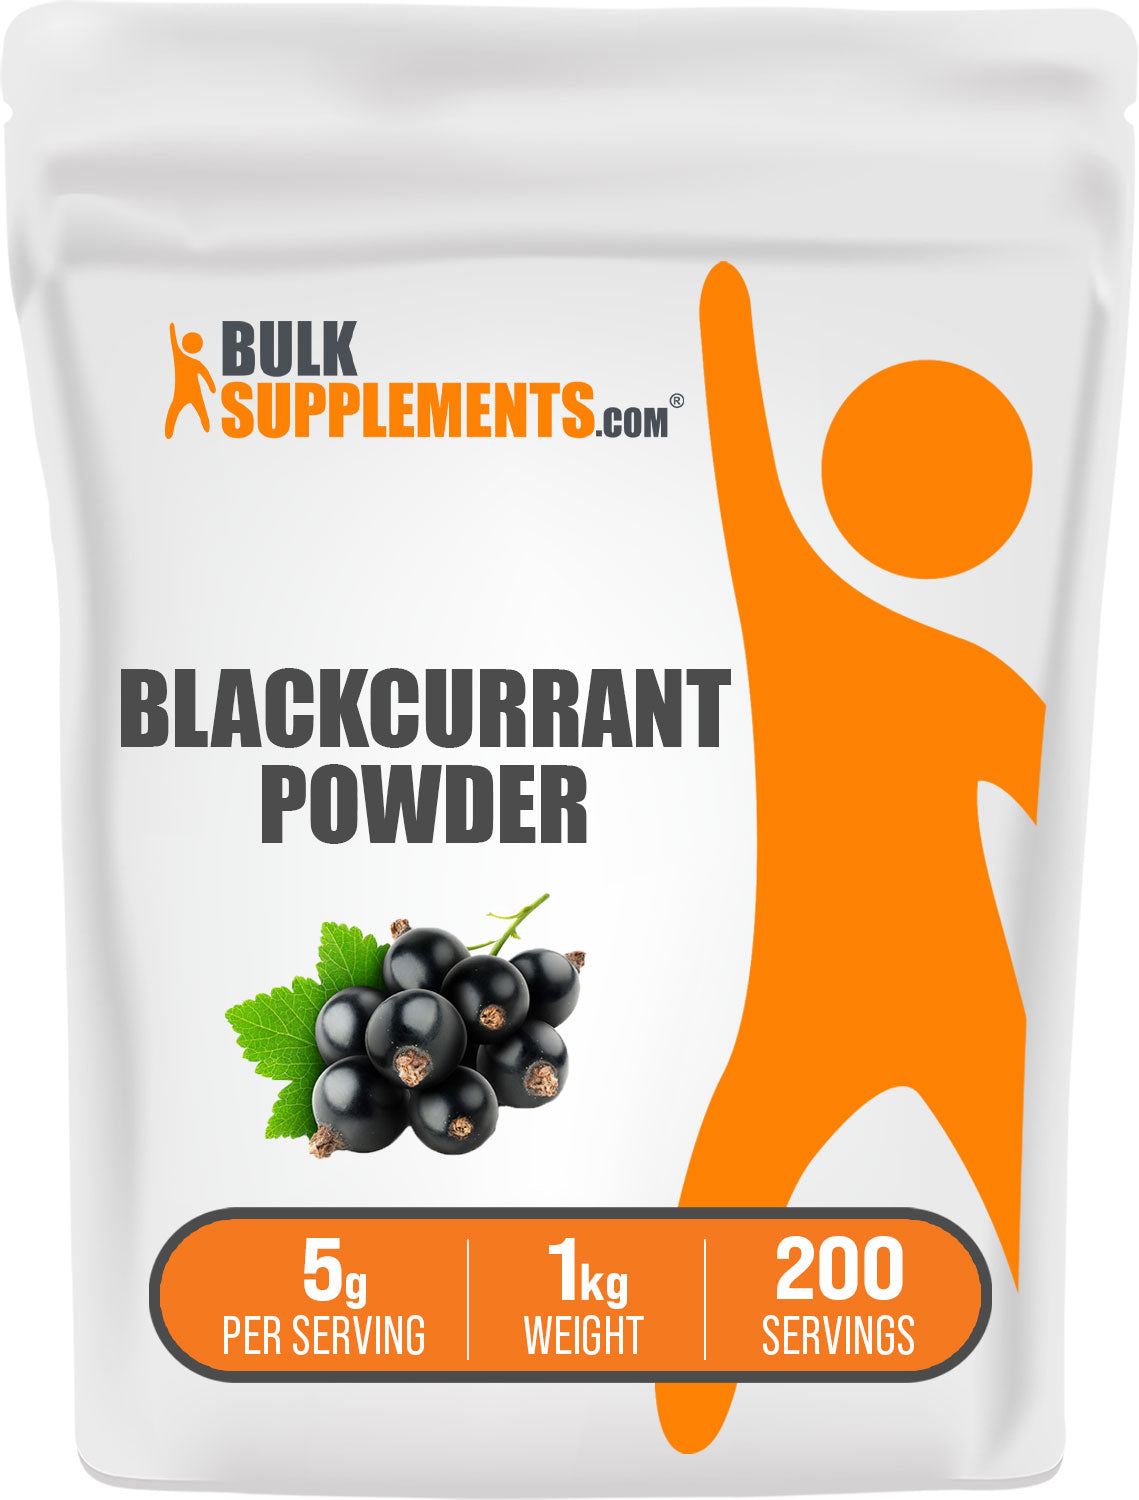 1kg of Blackcurrant Powder